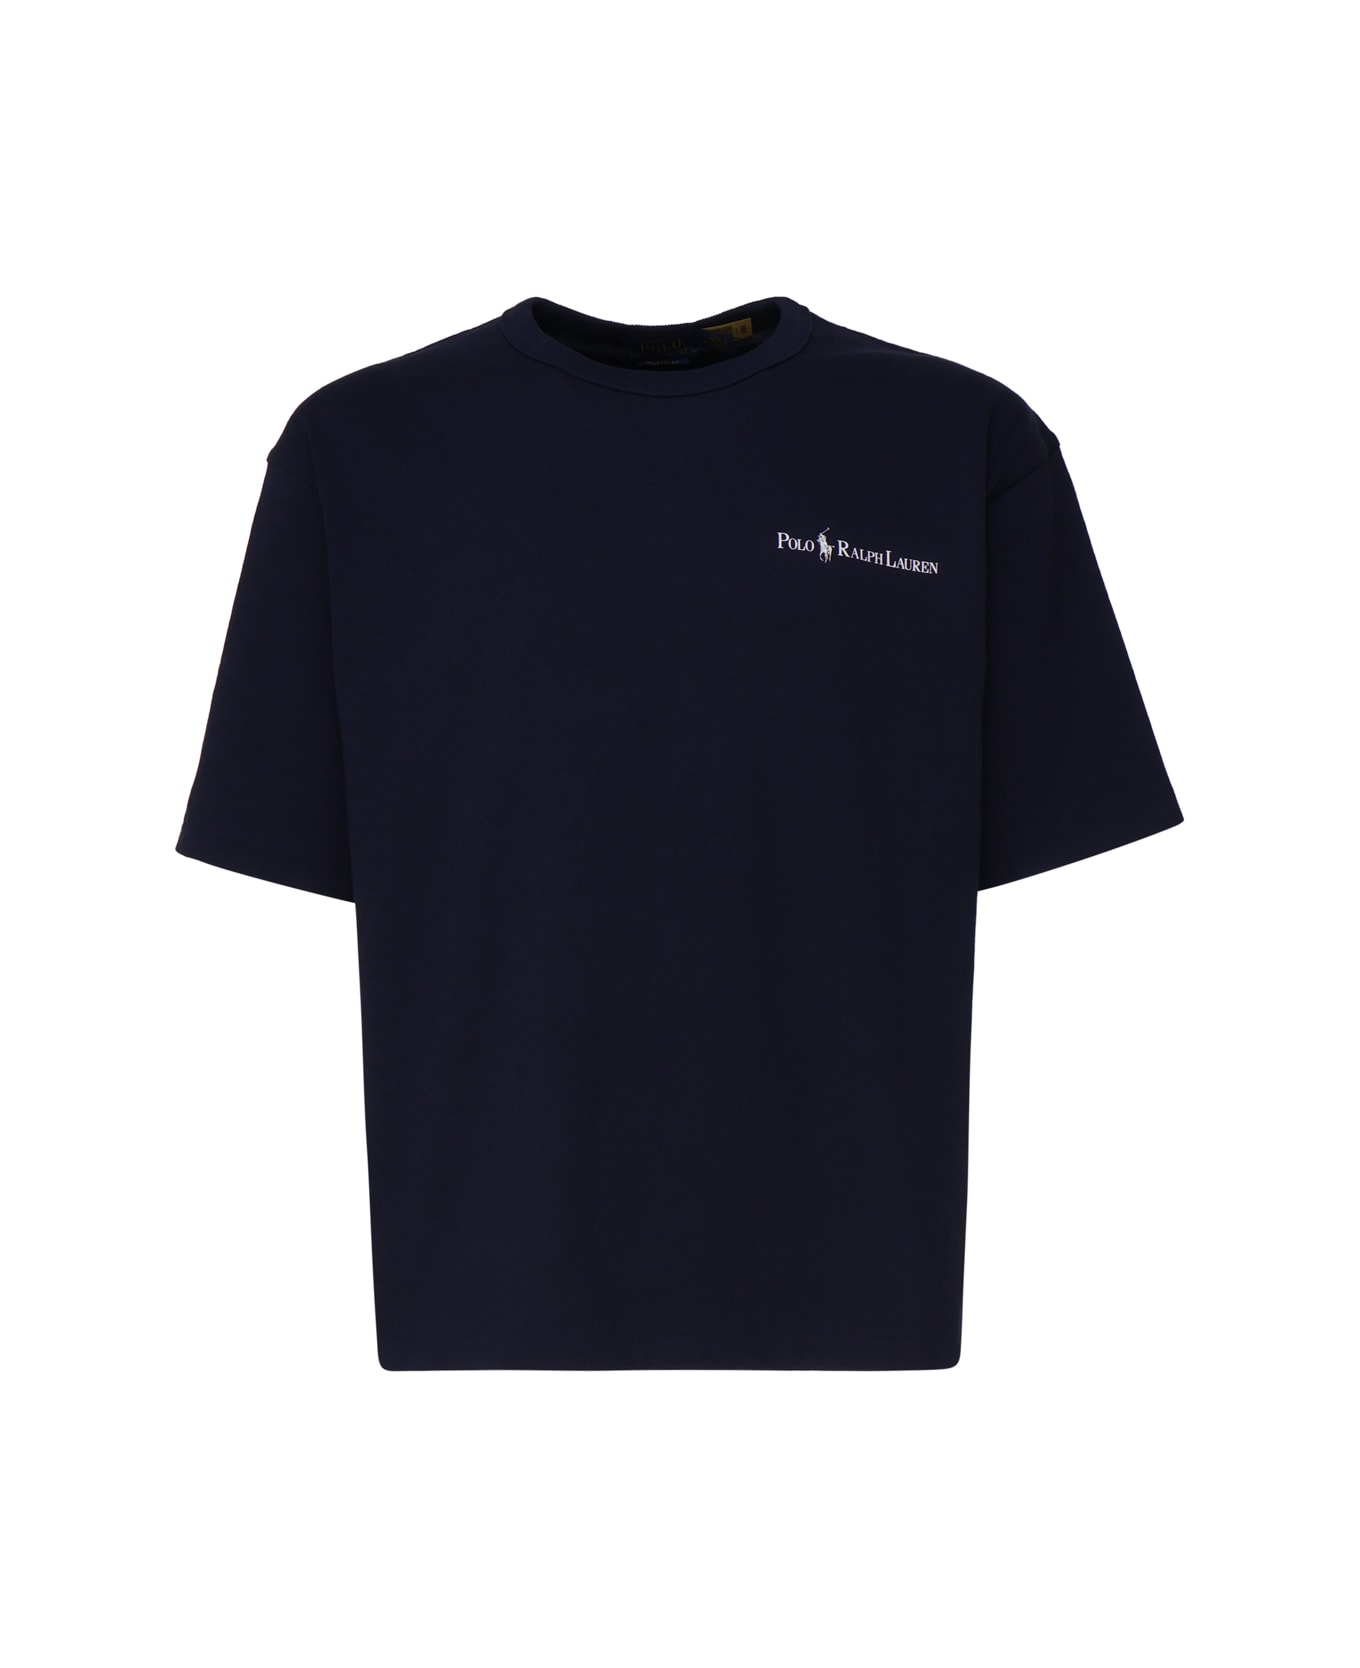 Polo Ralph Lauren T-shirt With Logo - Blue シャツ